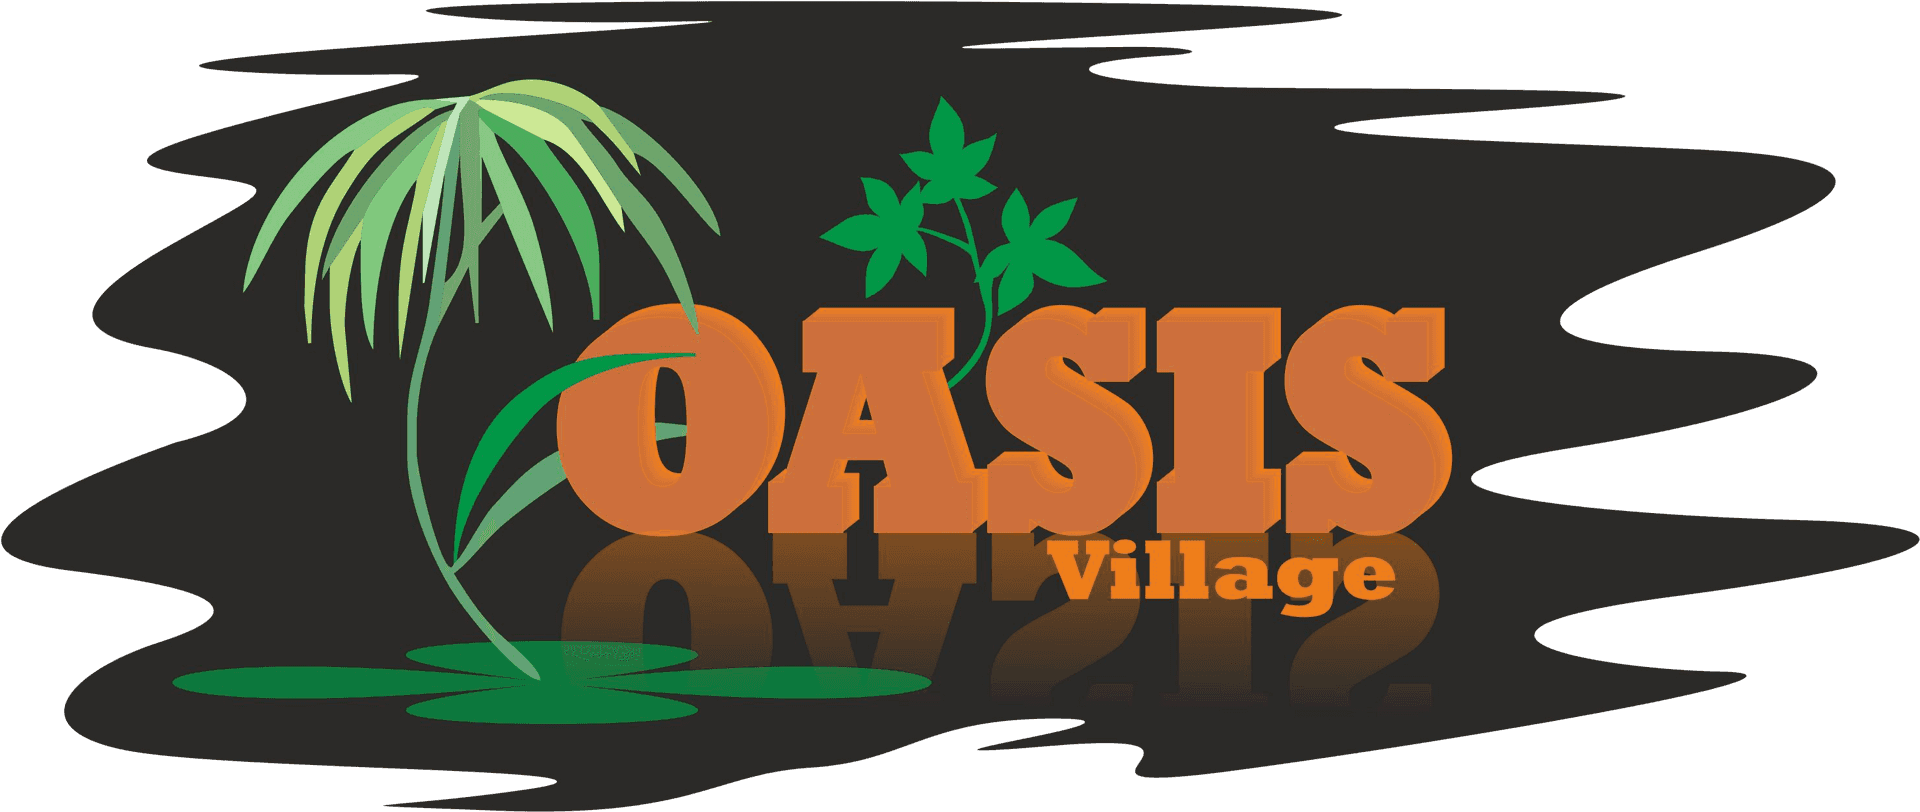 Oasis Village Graphic Logo PNG image